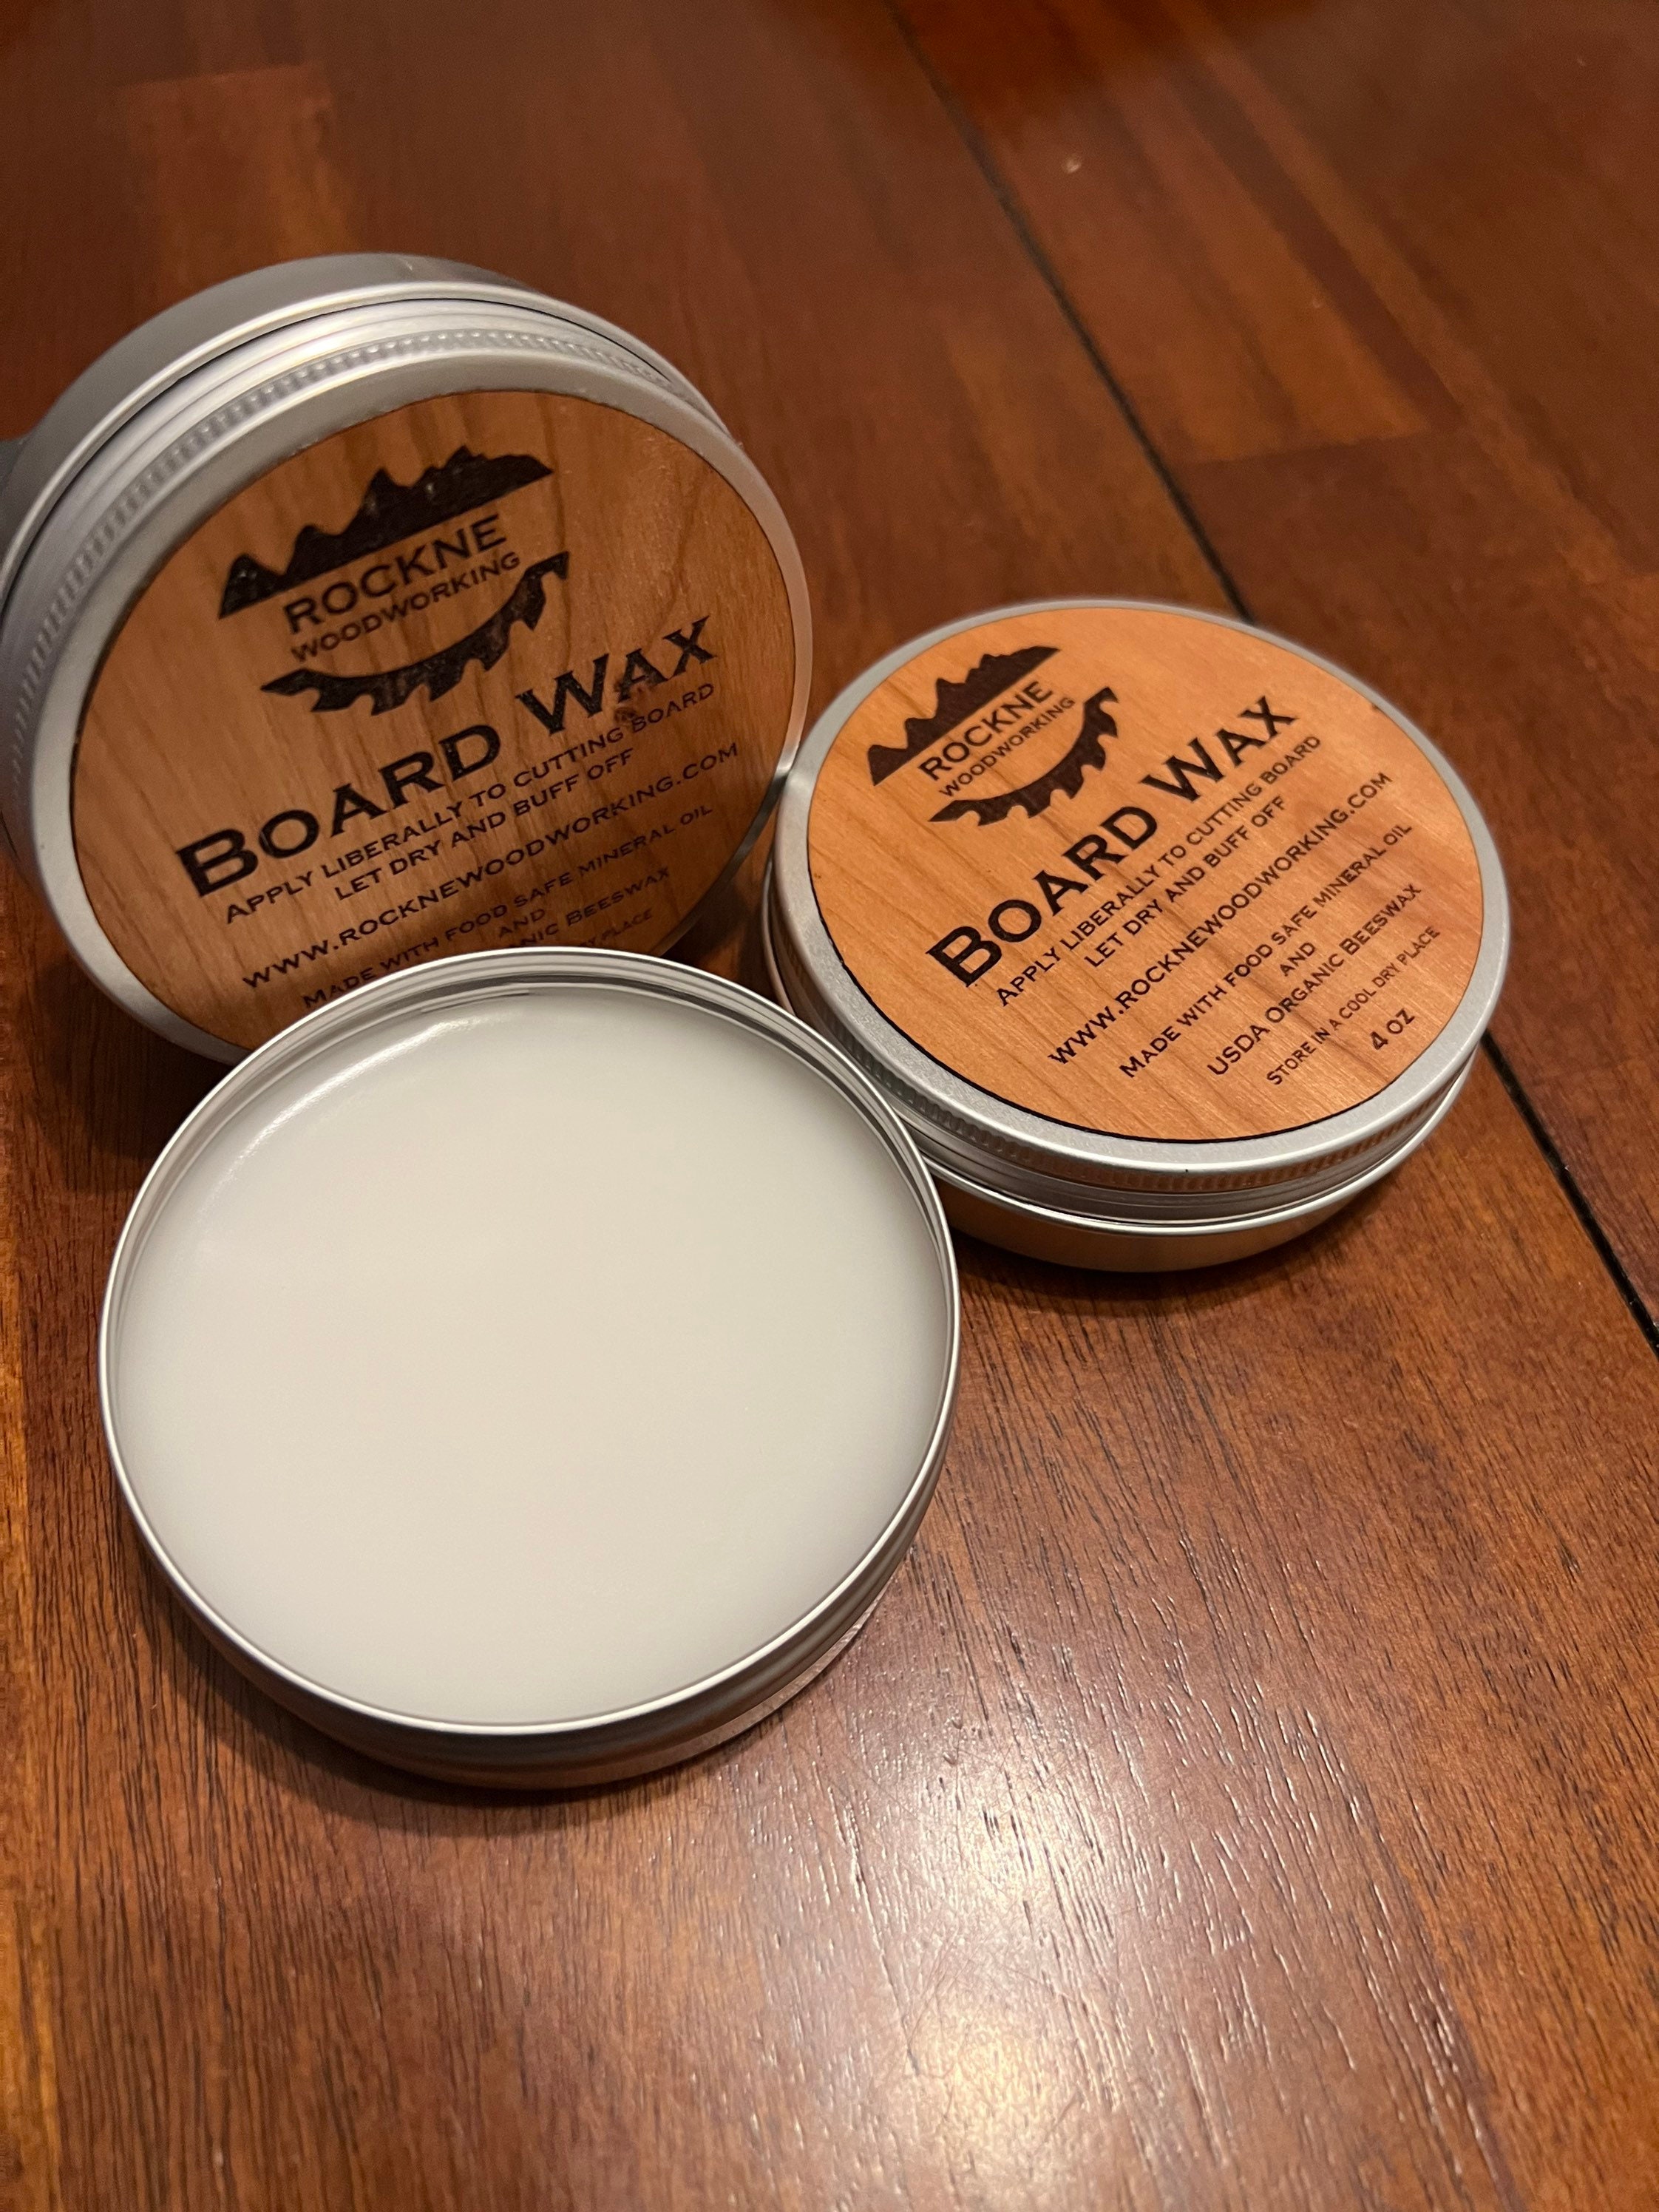 All Natural Cutting Board Seasoning Wax – 4 oz Tin